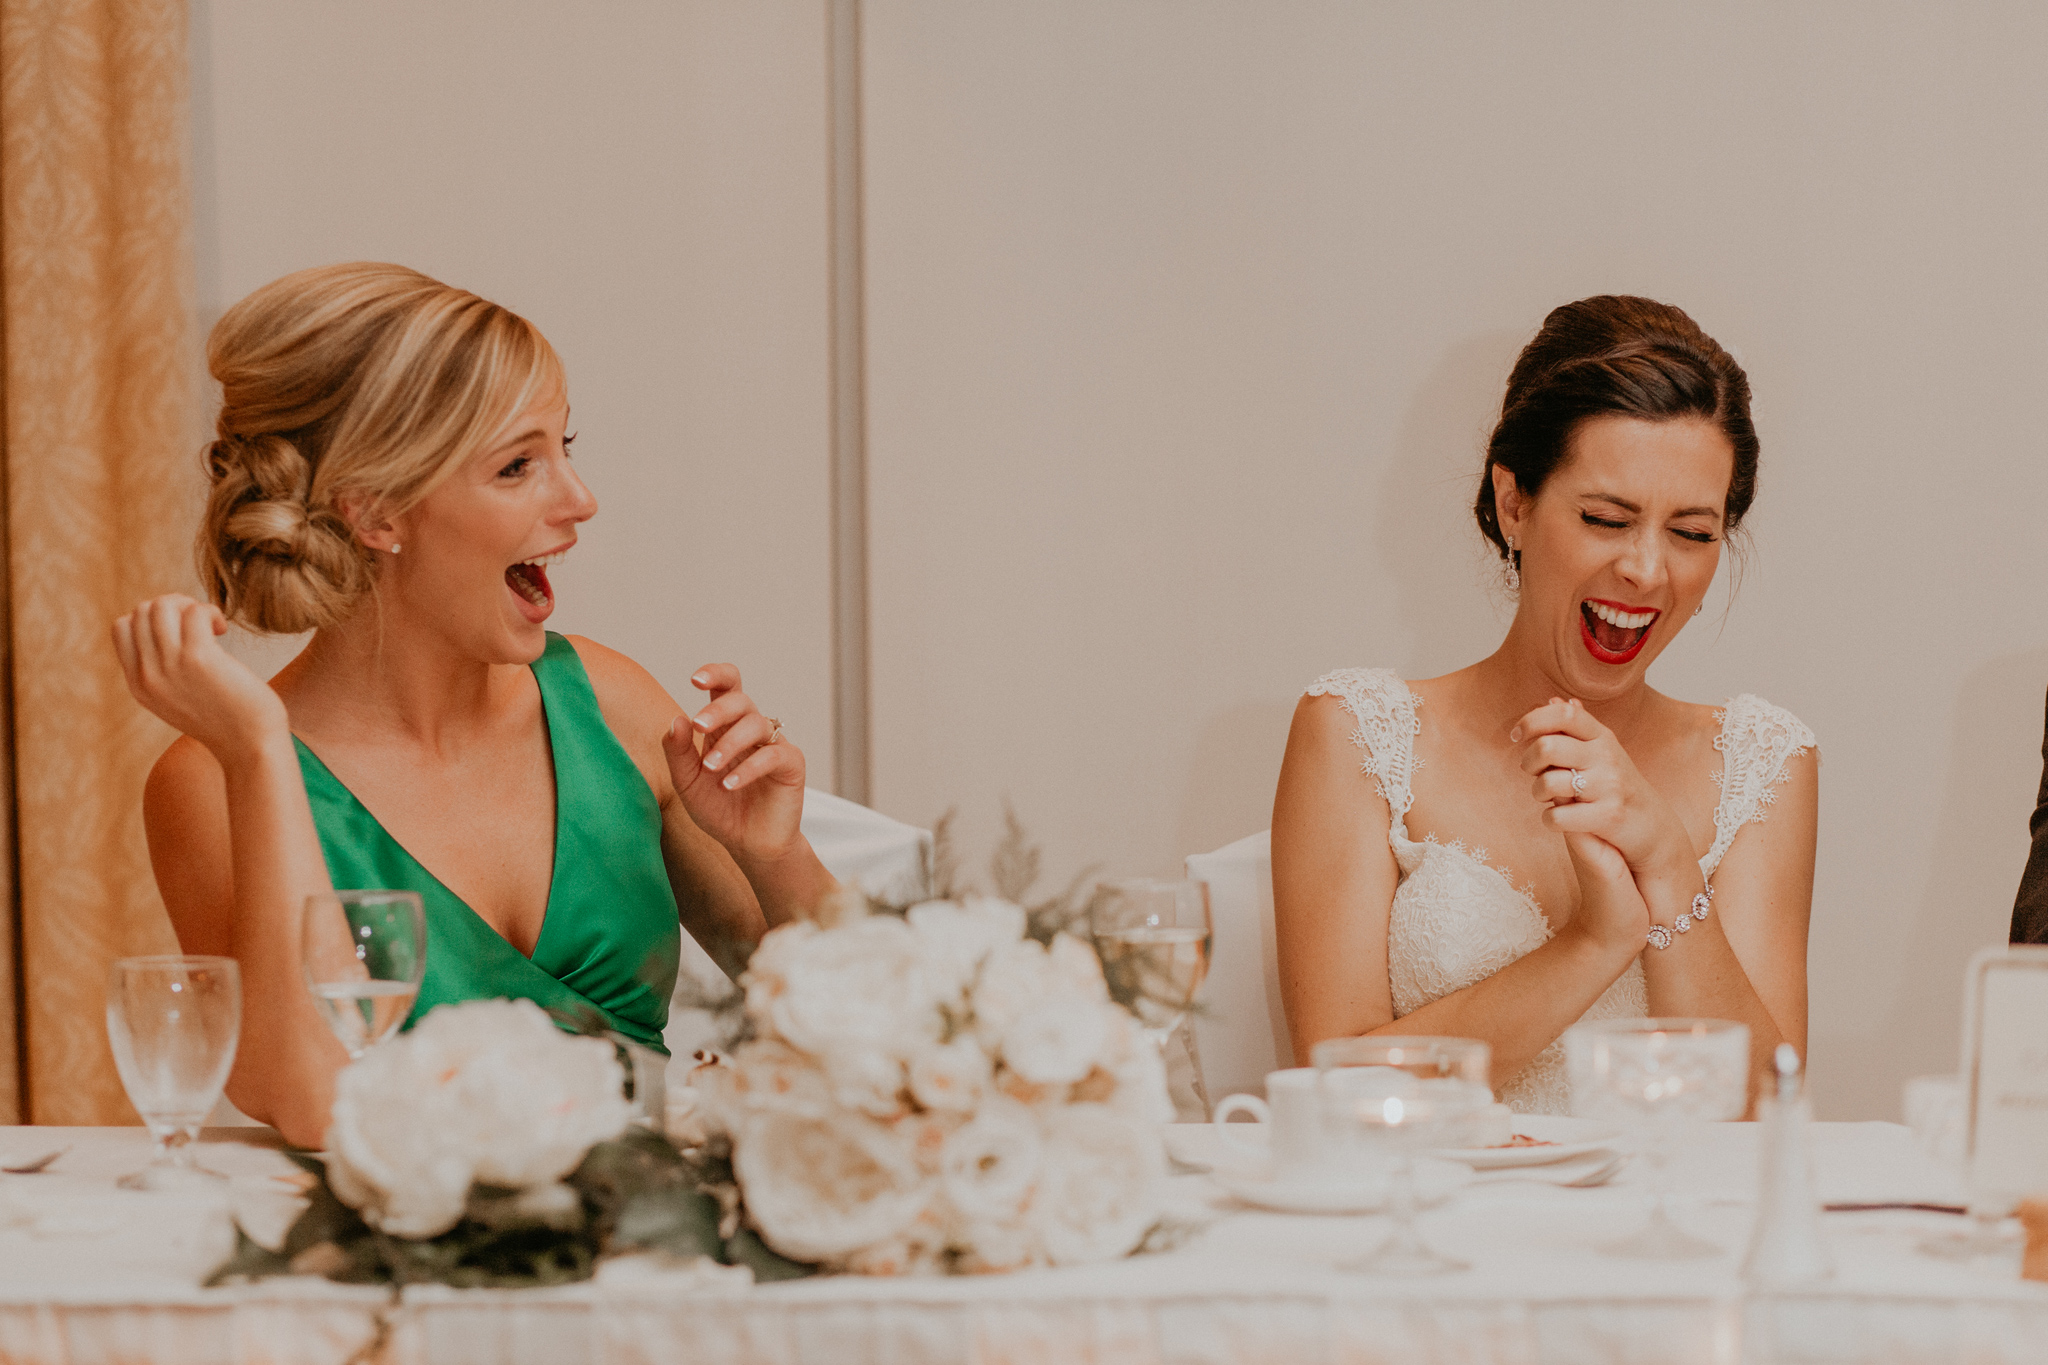 Bride and bridesmaid laugh during wedding reception speeches